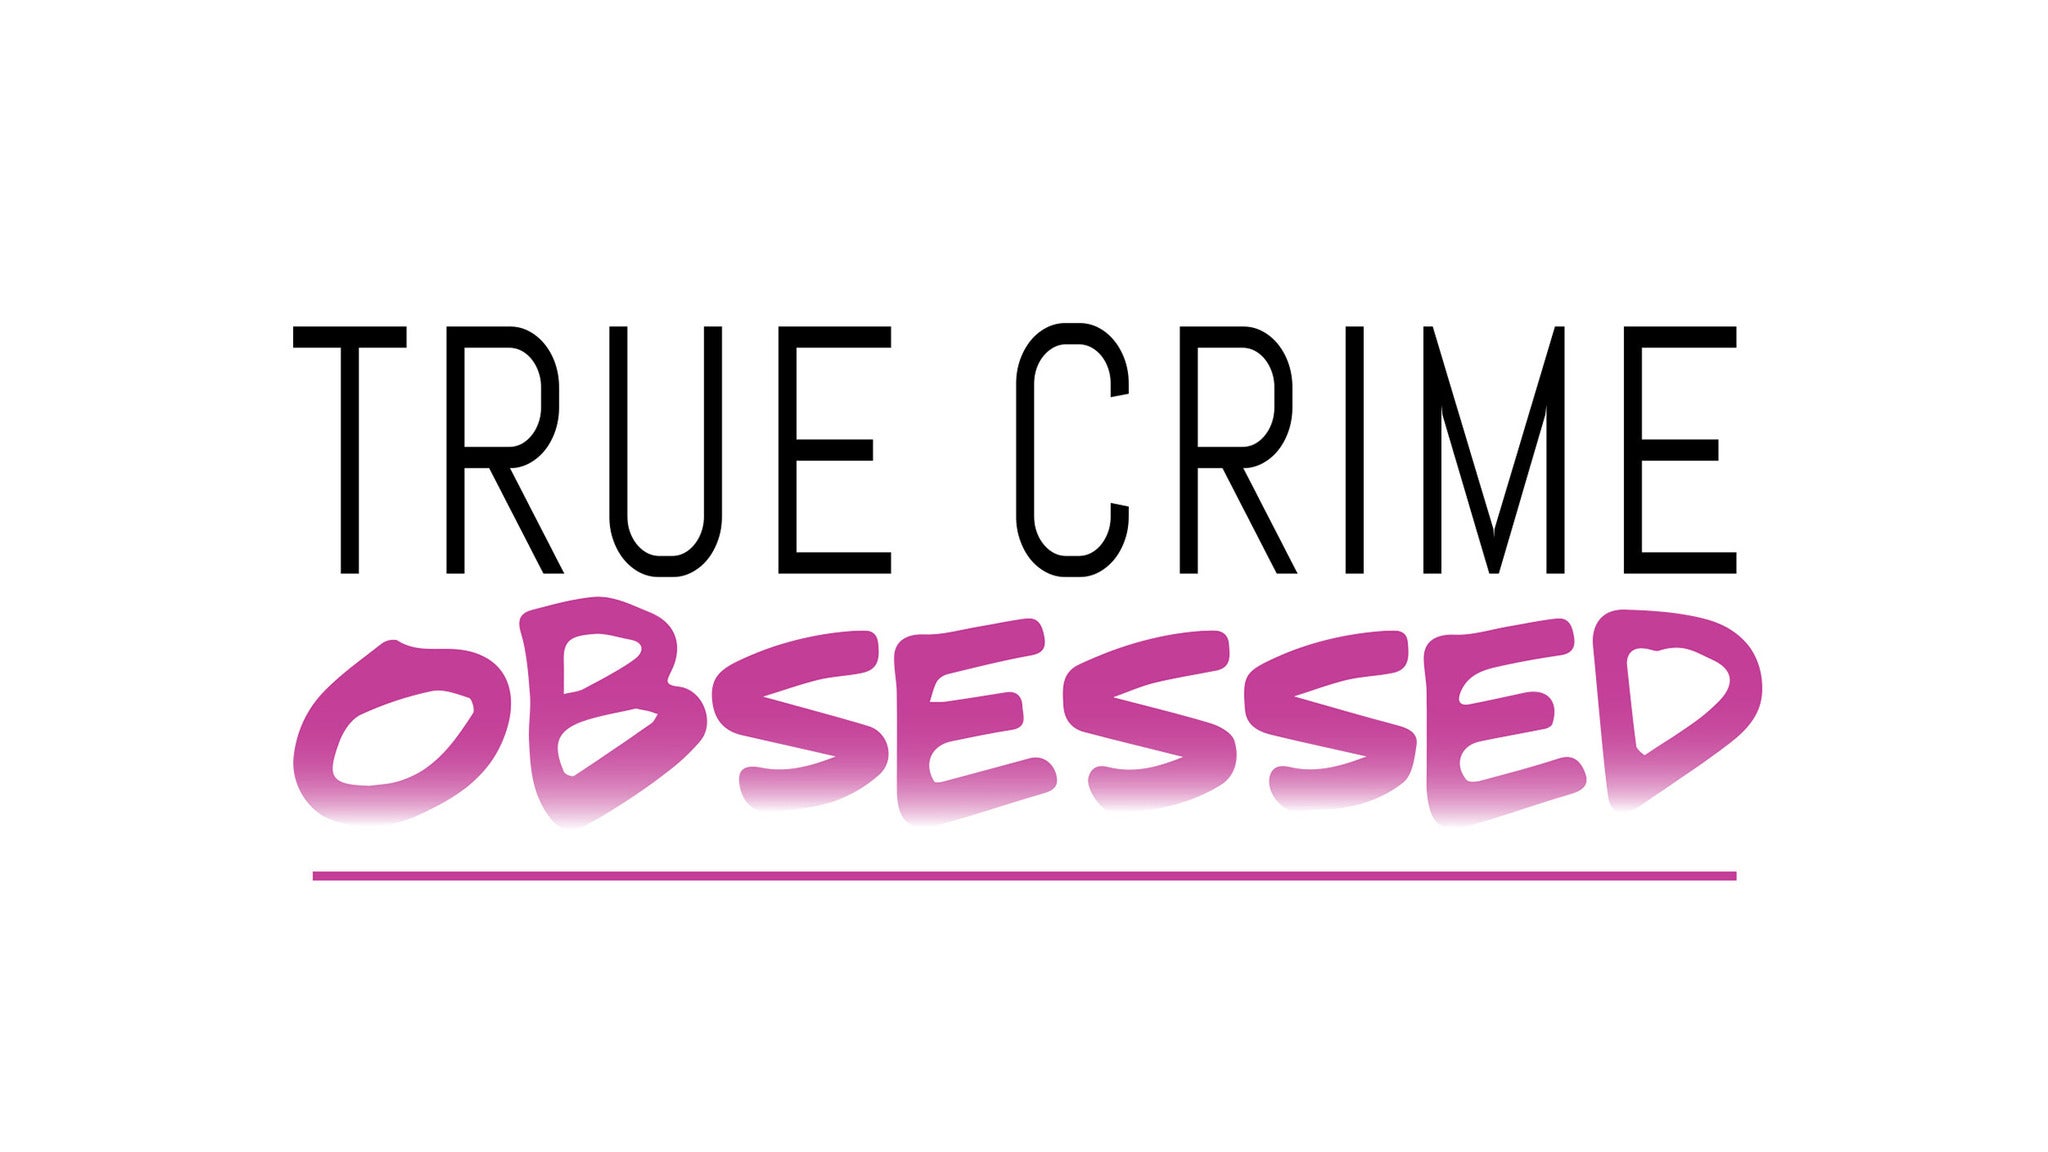 True Crime Obsessed Live! in Los Angeles promo photo for Concert Week Promotion presale offer code